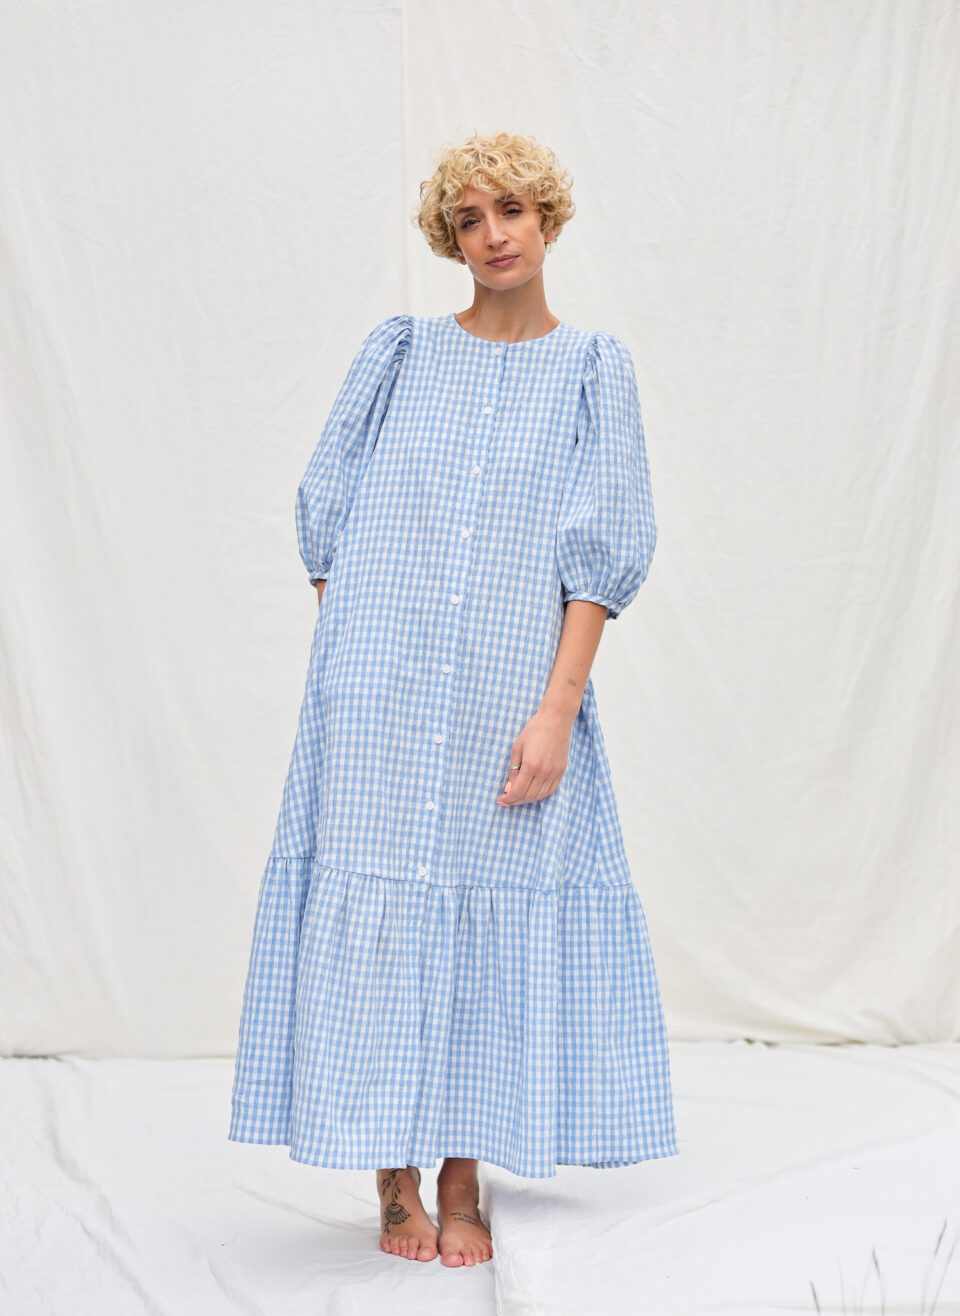 Flowy ruffled skirt dress CHLOE | Dress | Sustainable clothing | OffOn clothing